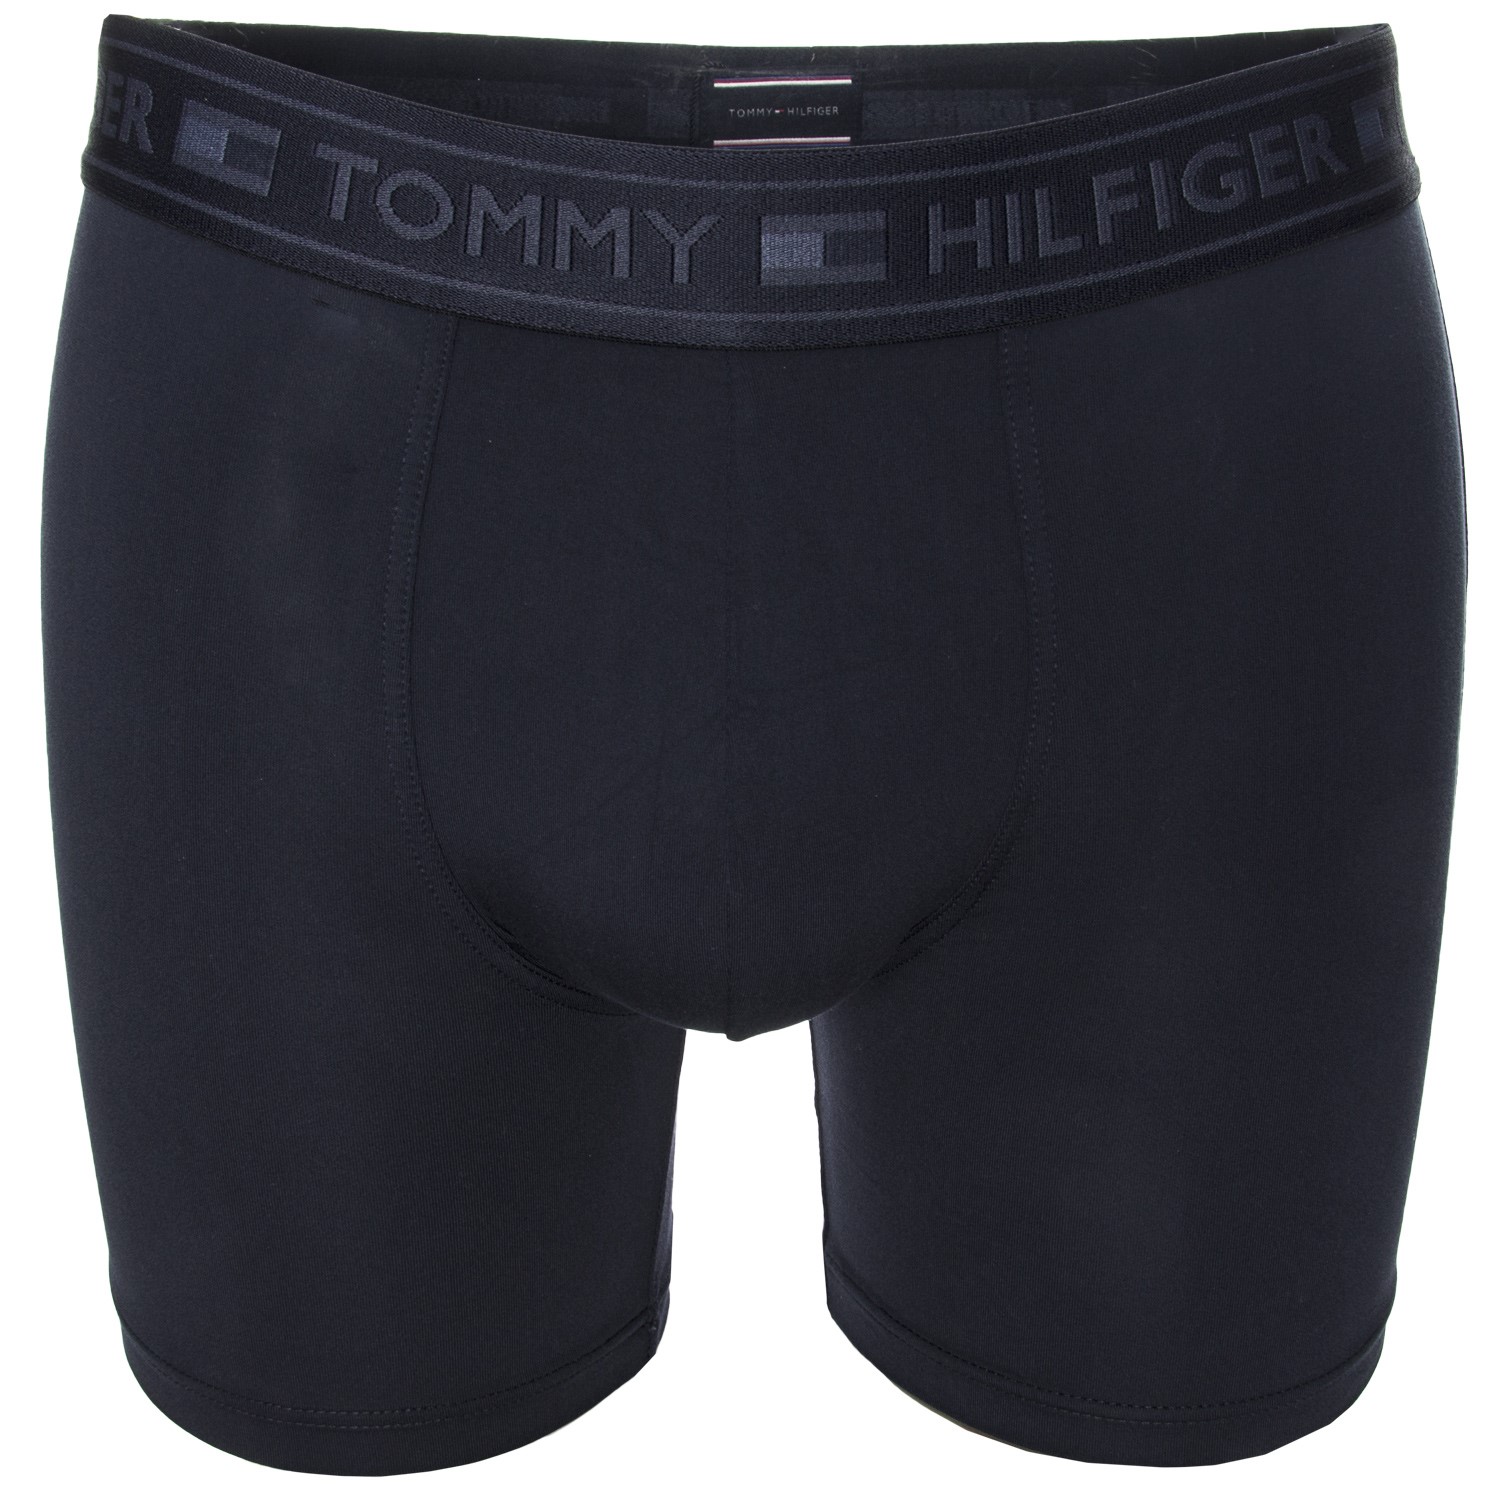 Hilfiger Boxer - Boxer - Trunks - Underwear - Upperty.co.uk